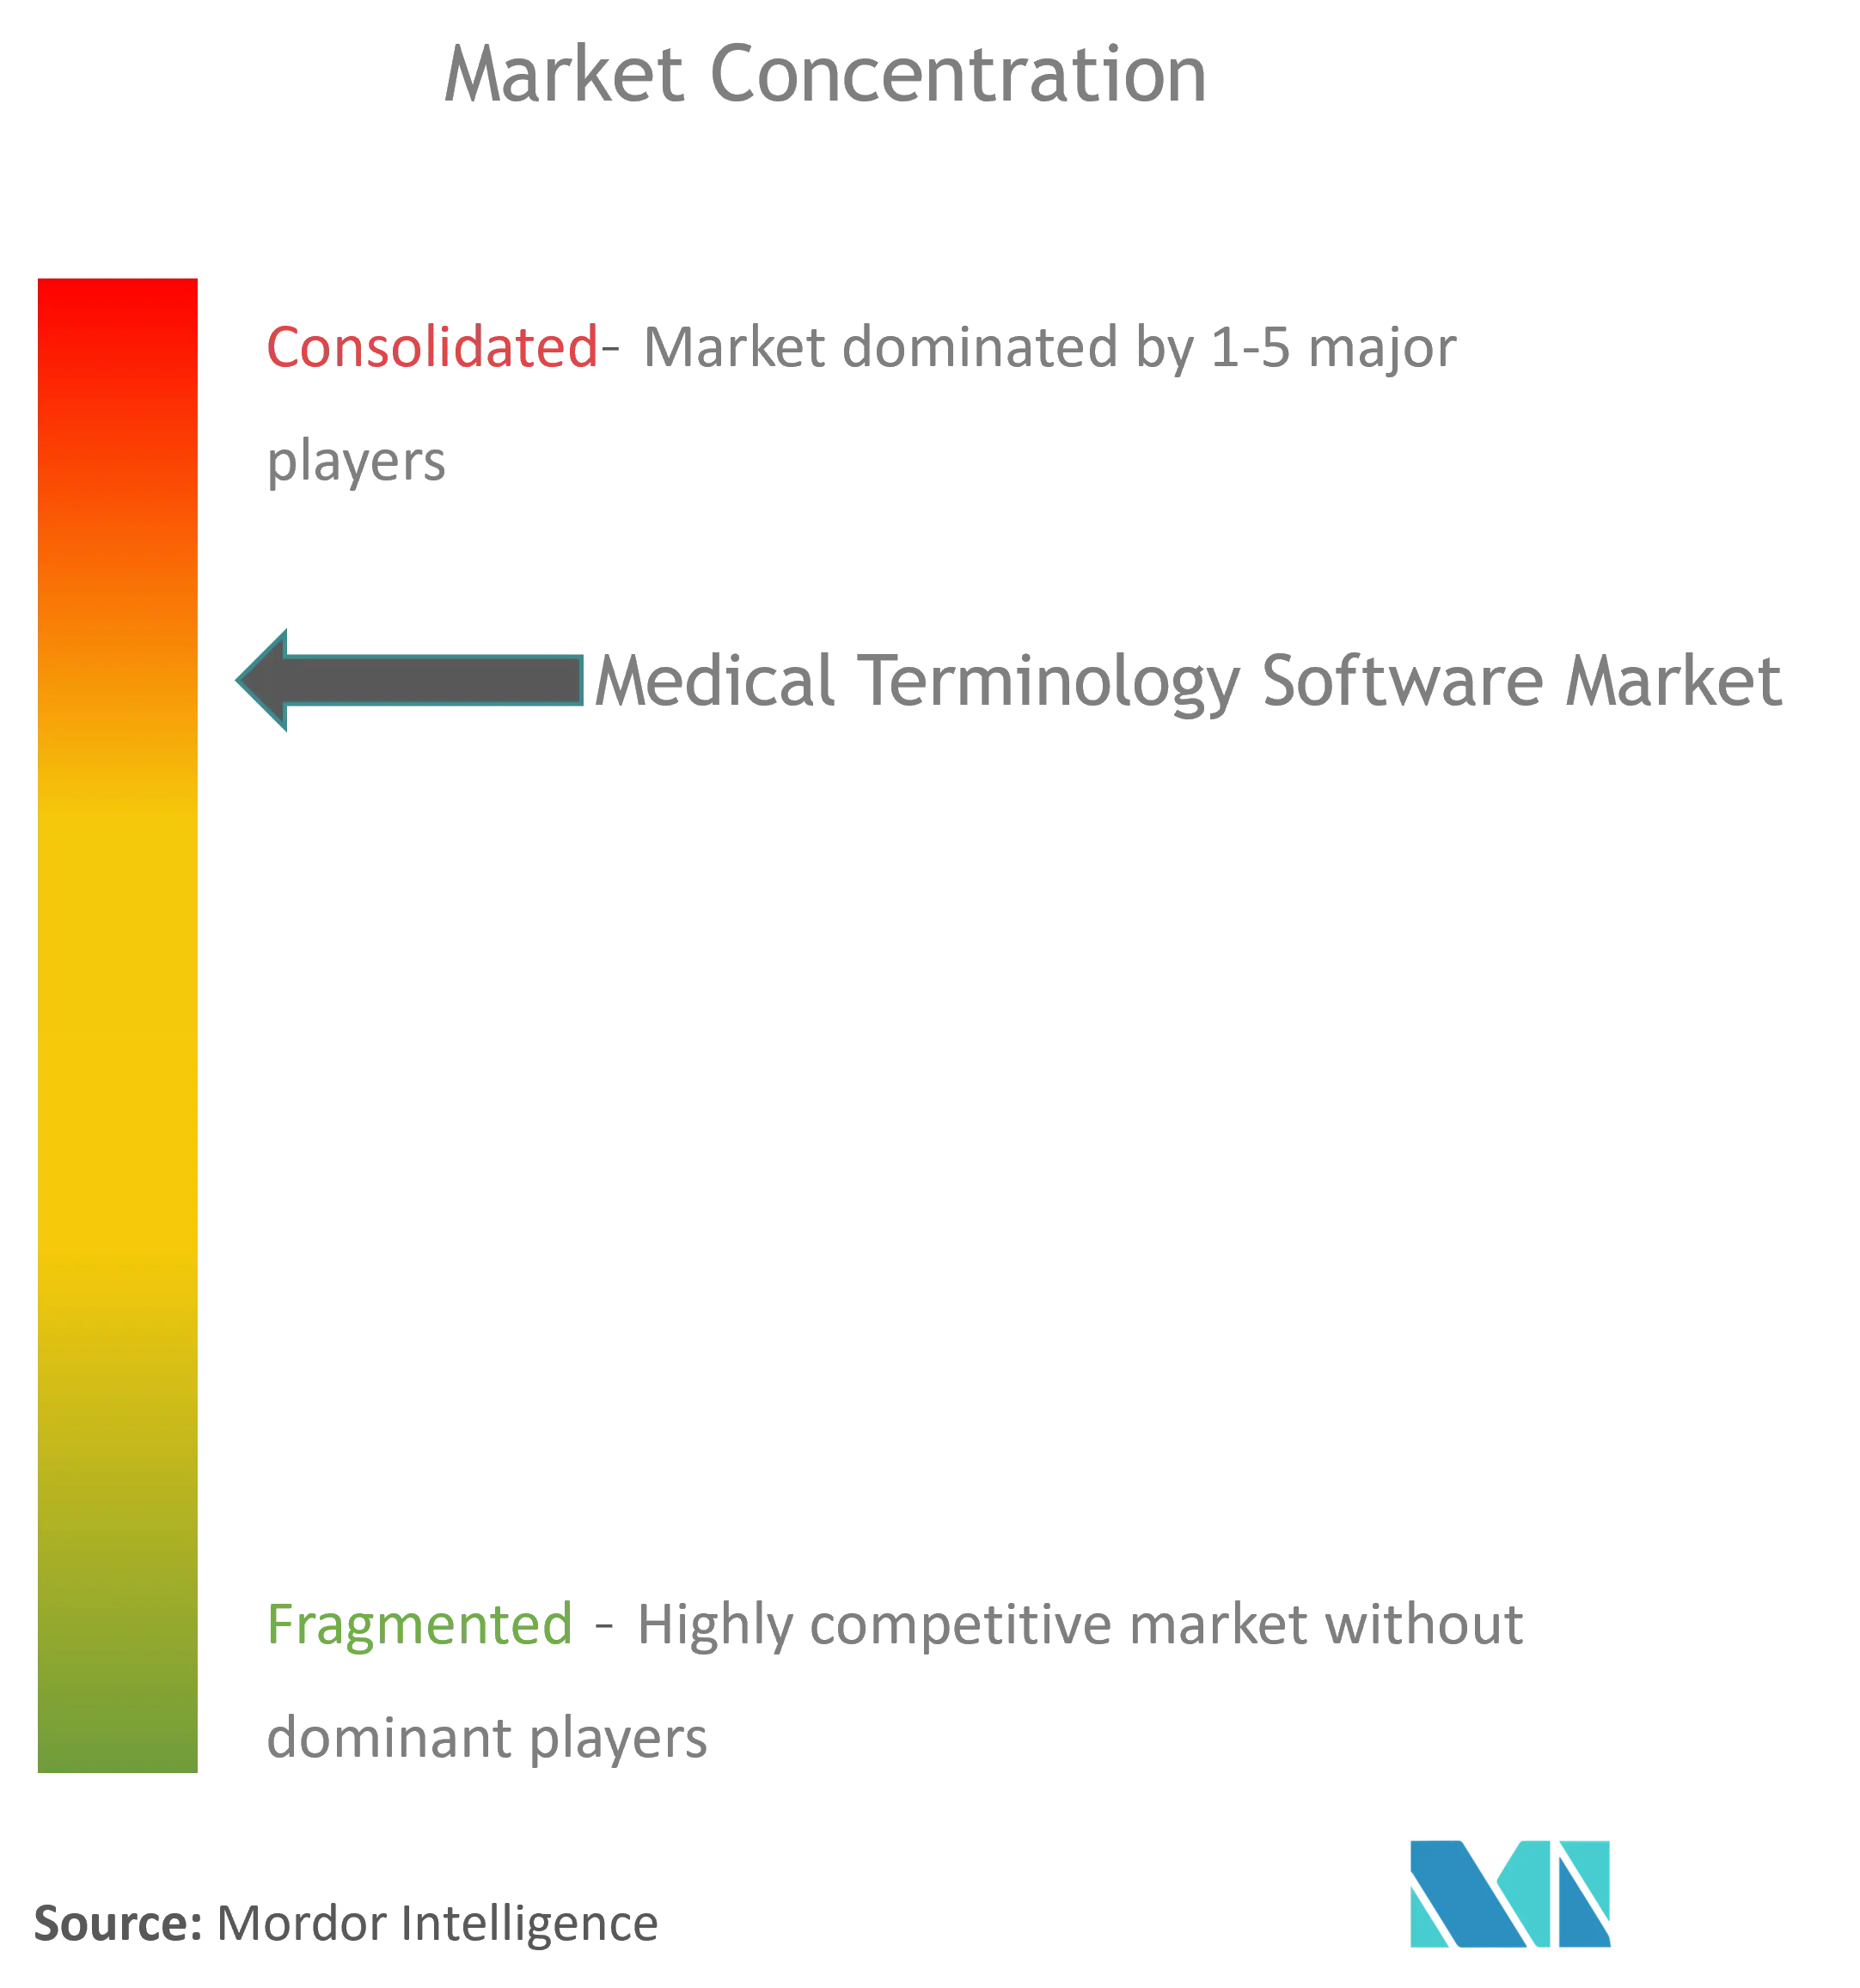 Medical Terminology Software Market Concentration